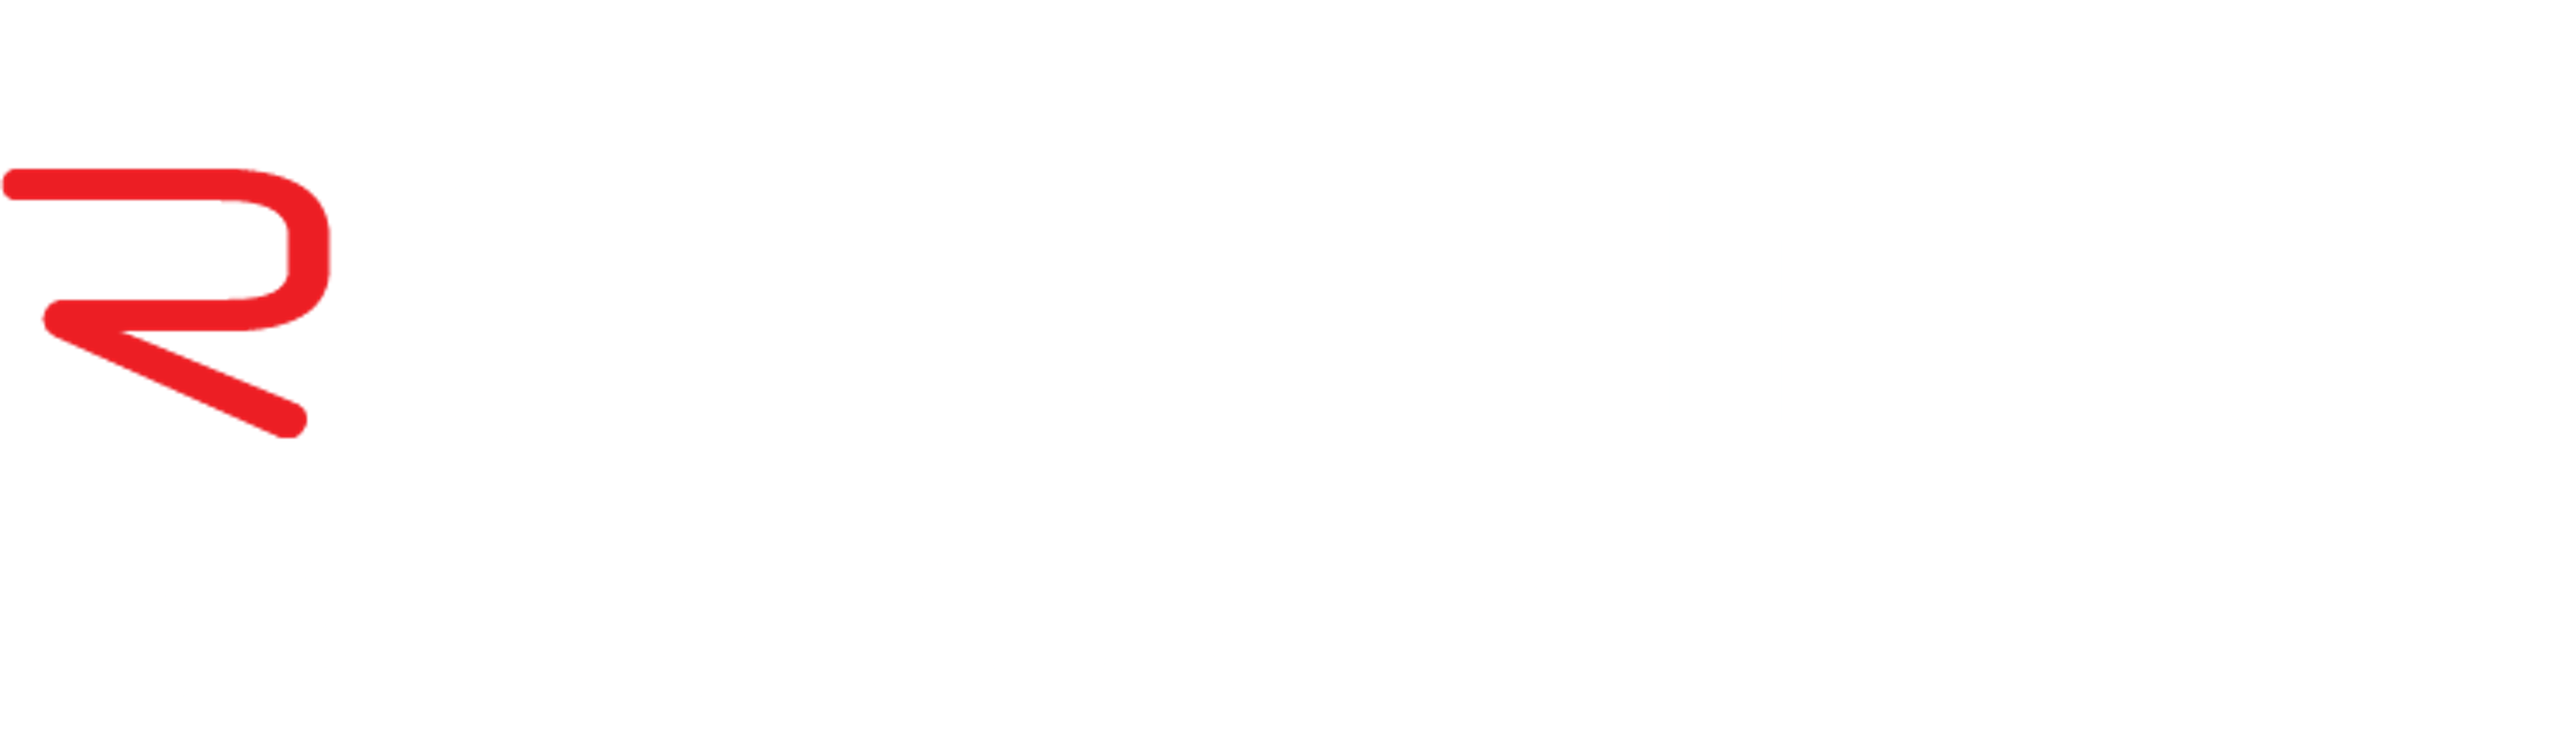 Redline Cyber Security